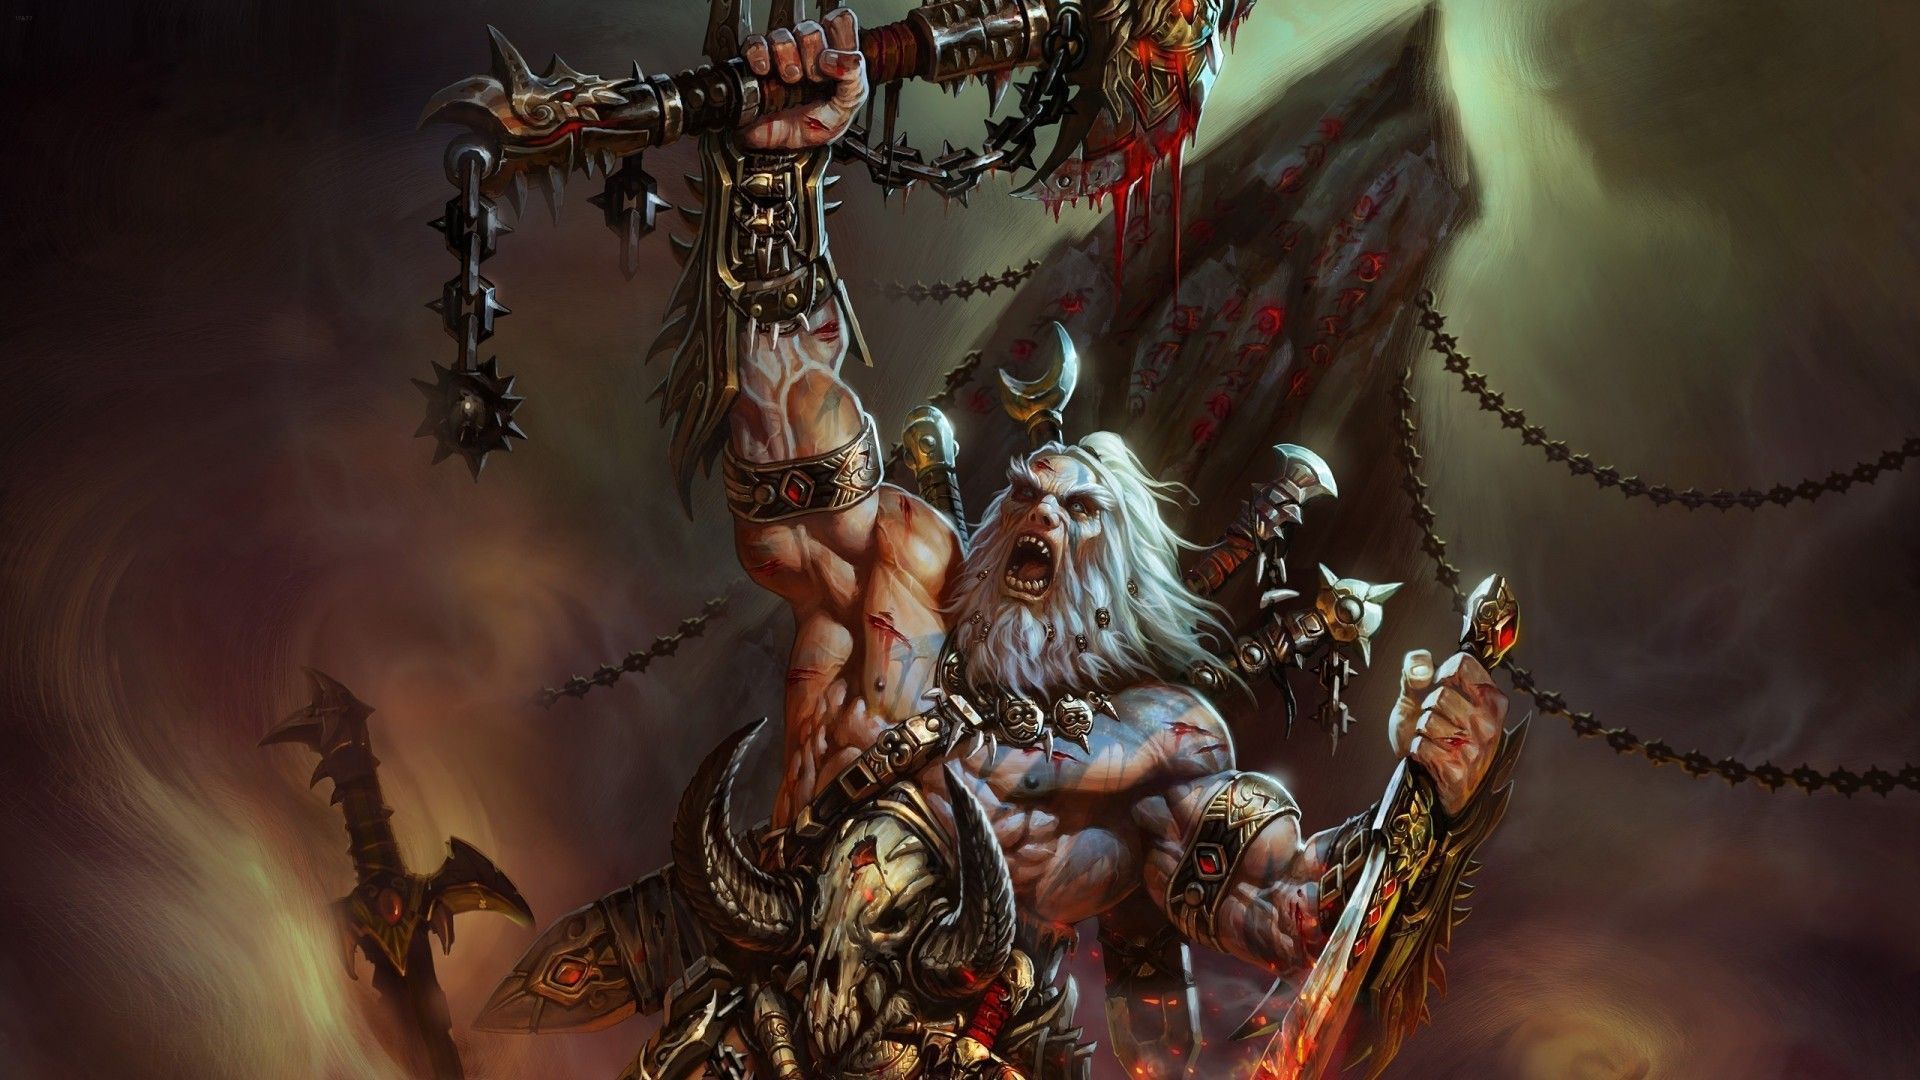 Diablo 3 - The Barbarian 1920x1080 (1080p) - Wallpaper - Games ...